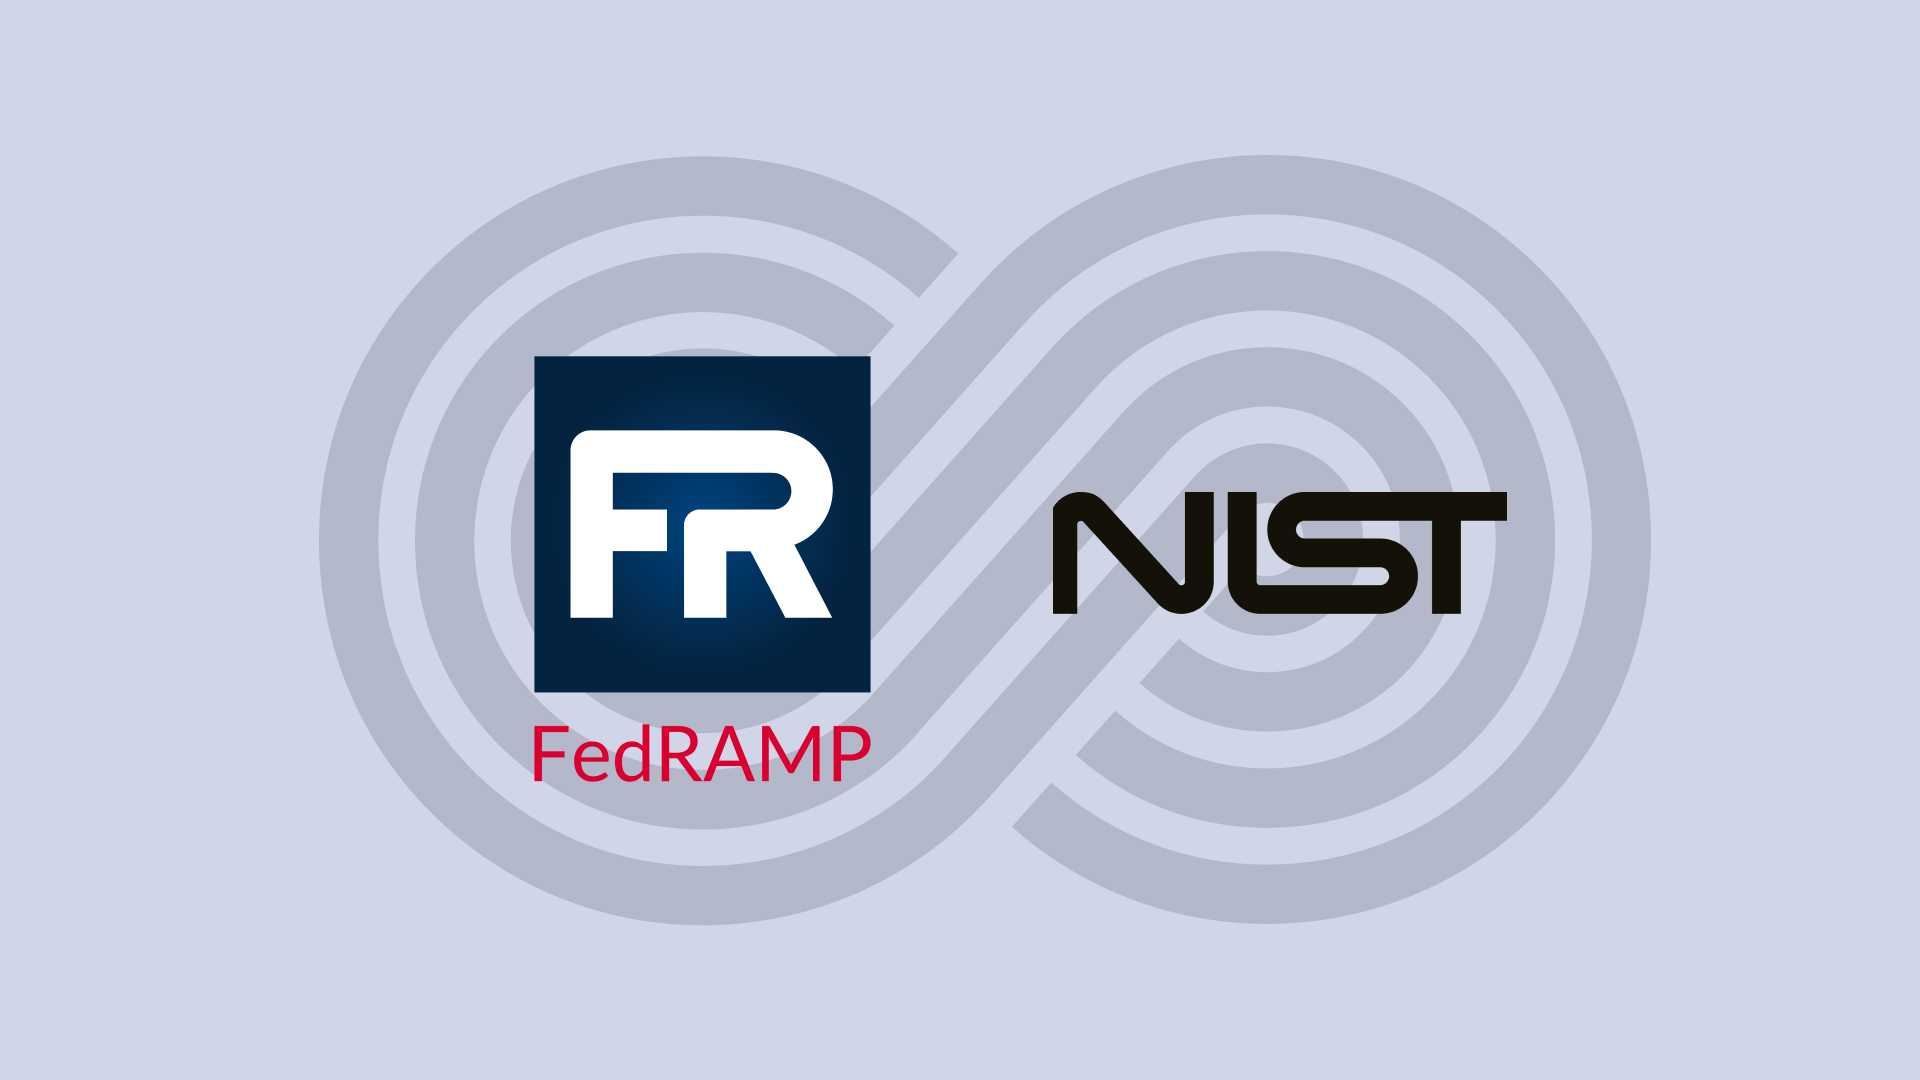 Fedramp and NIST